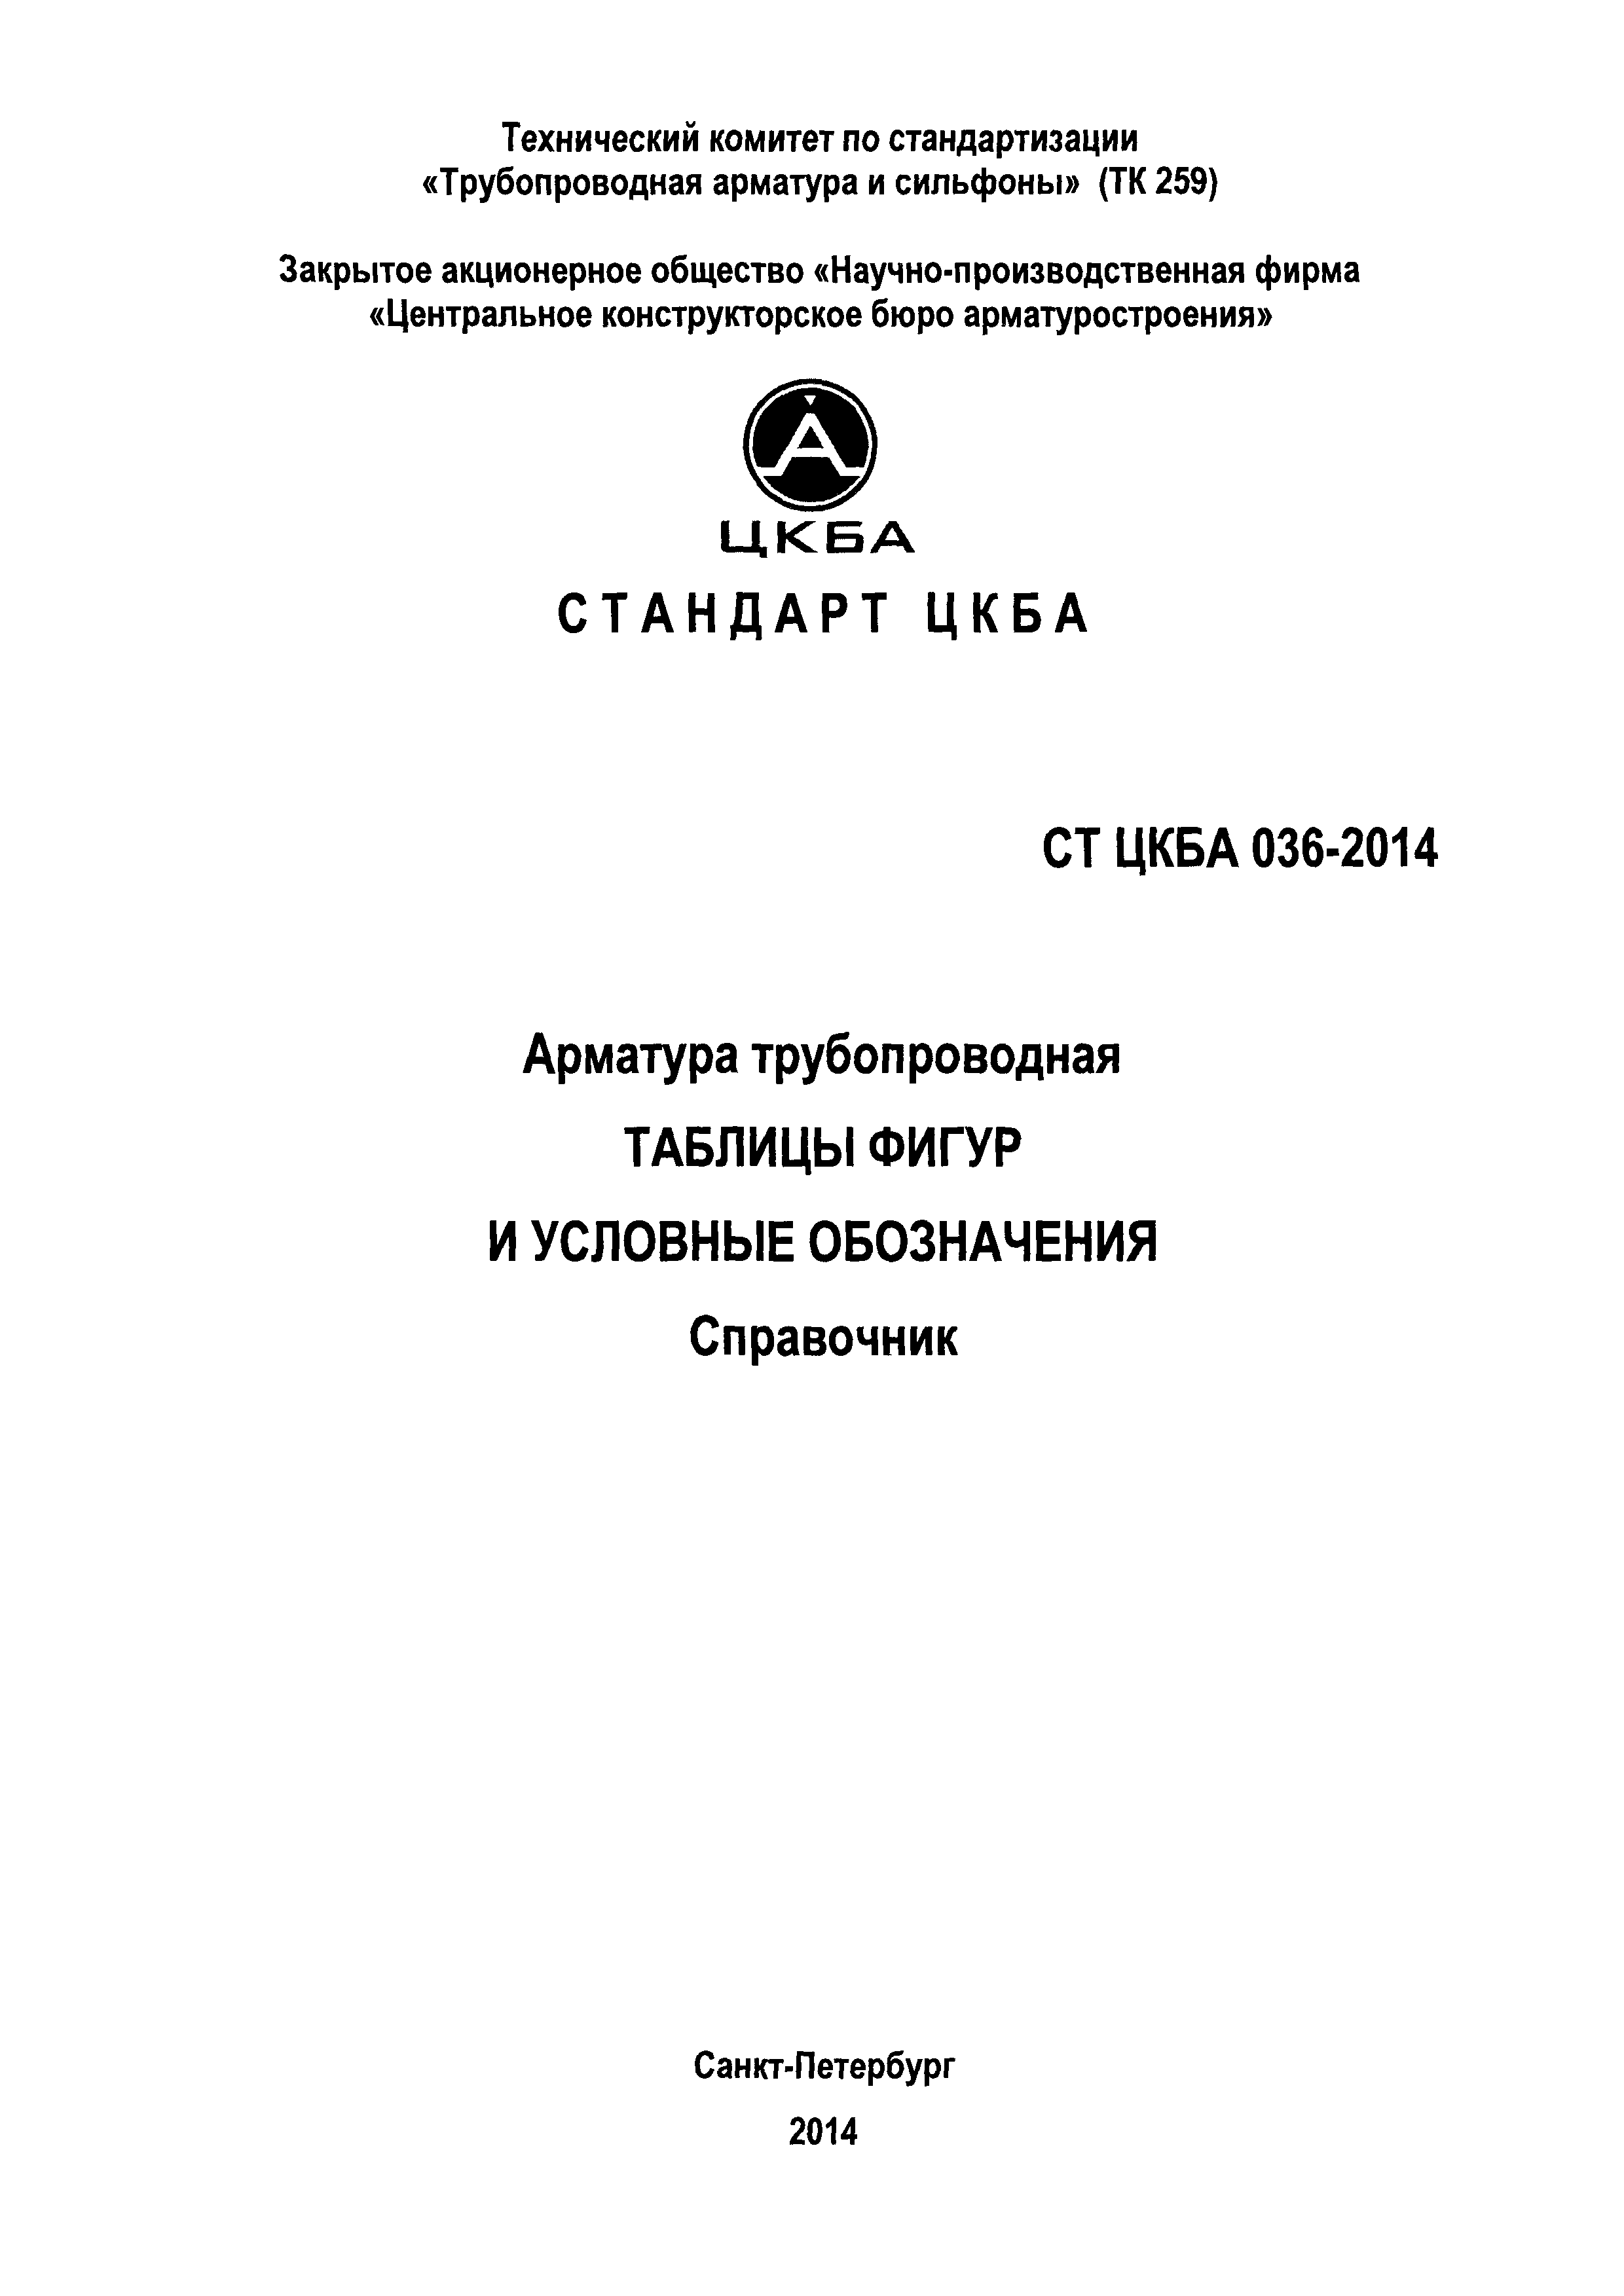 СТ ЦКБА 036-2014